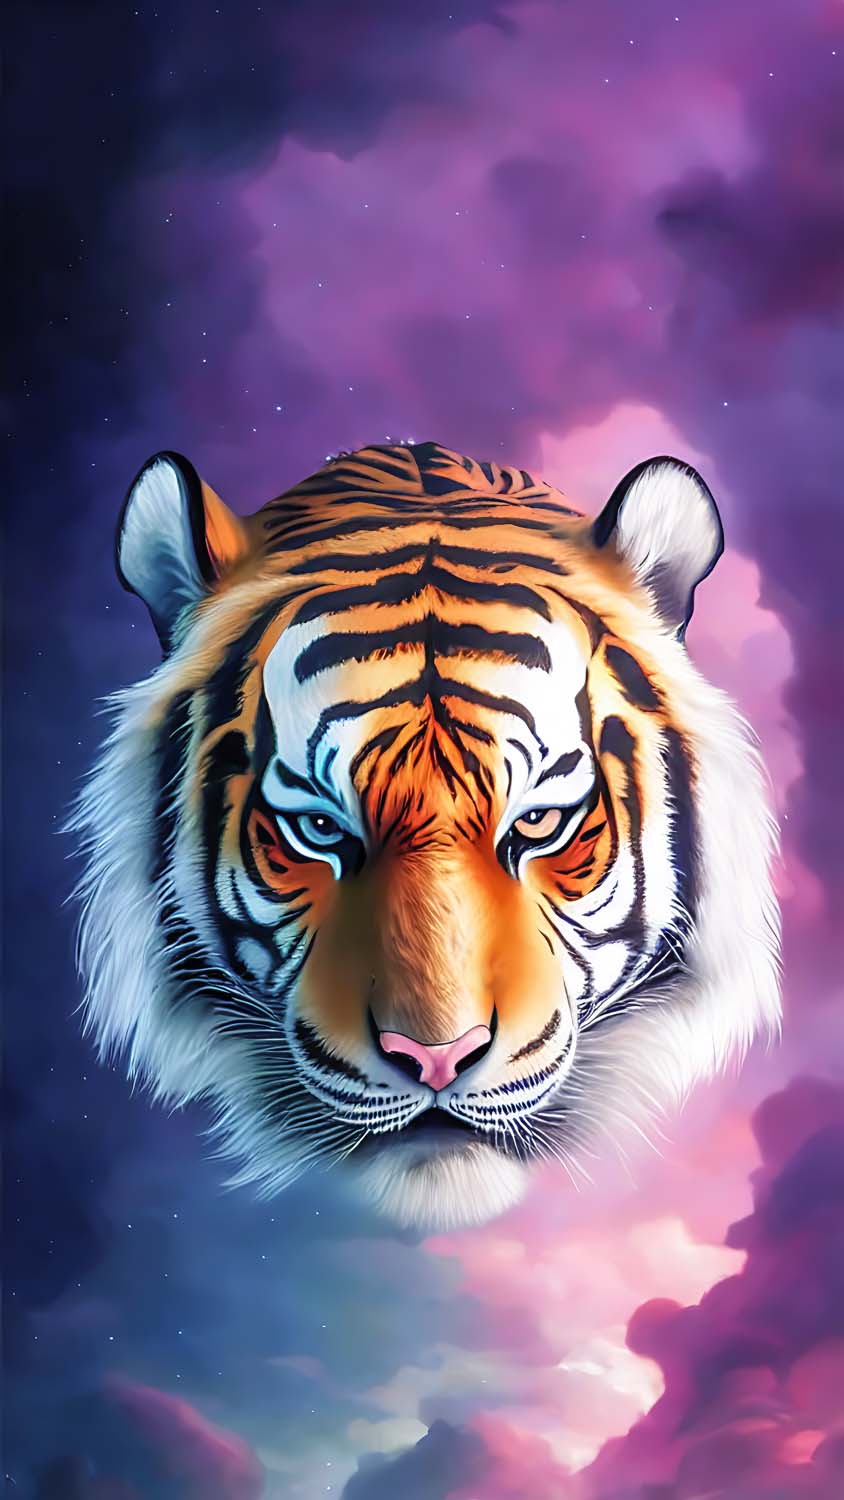 The Tiger Art iPhone Wallpaper HD